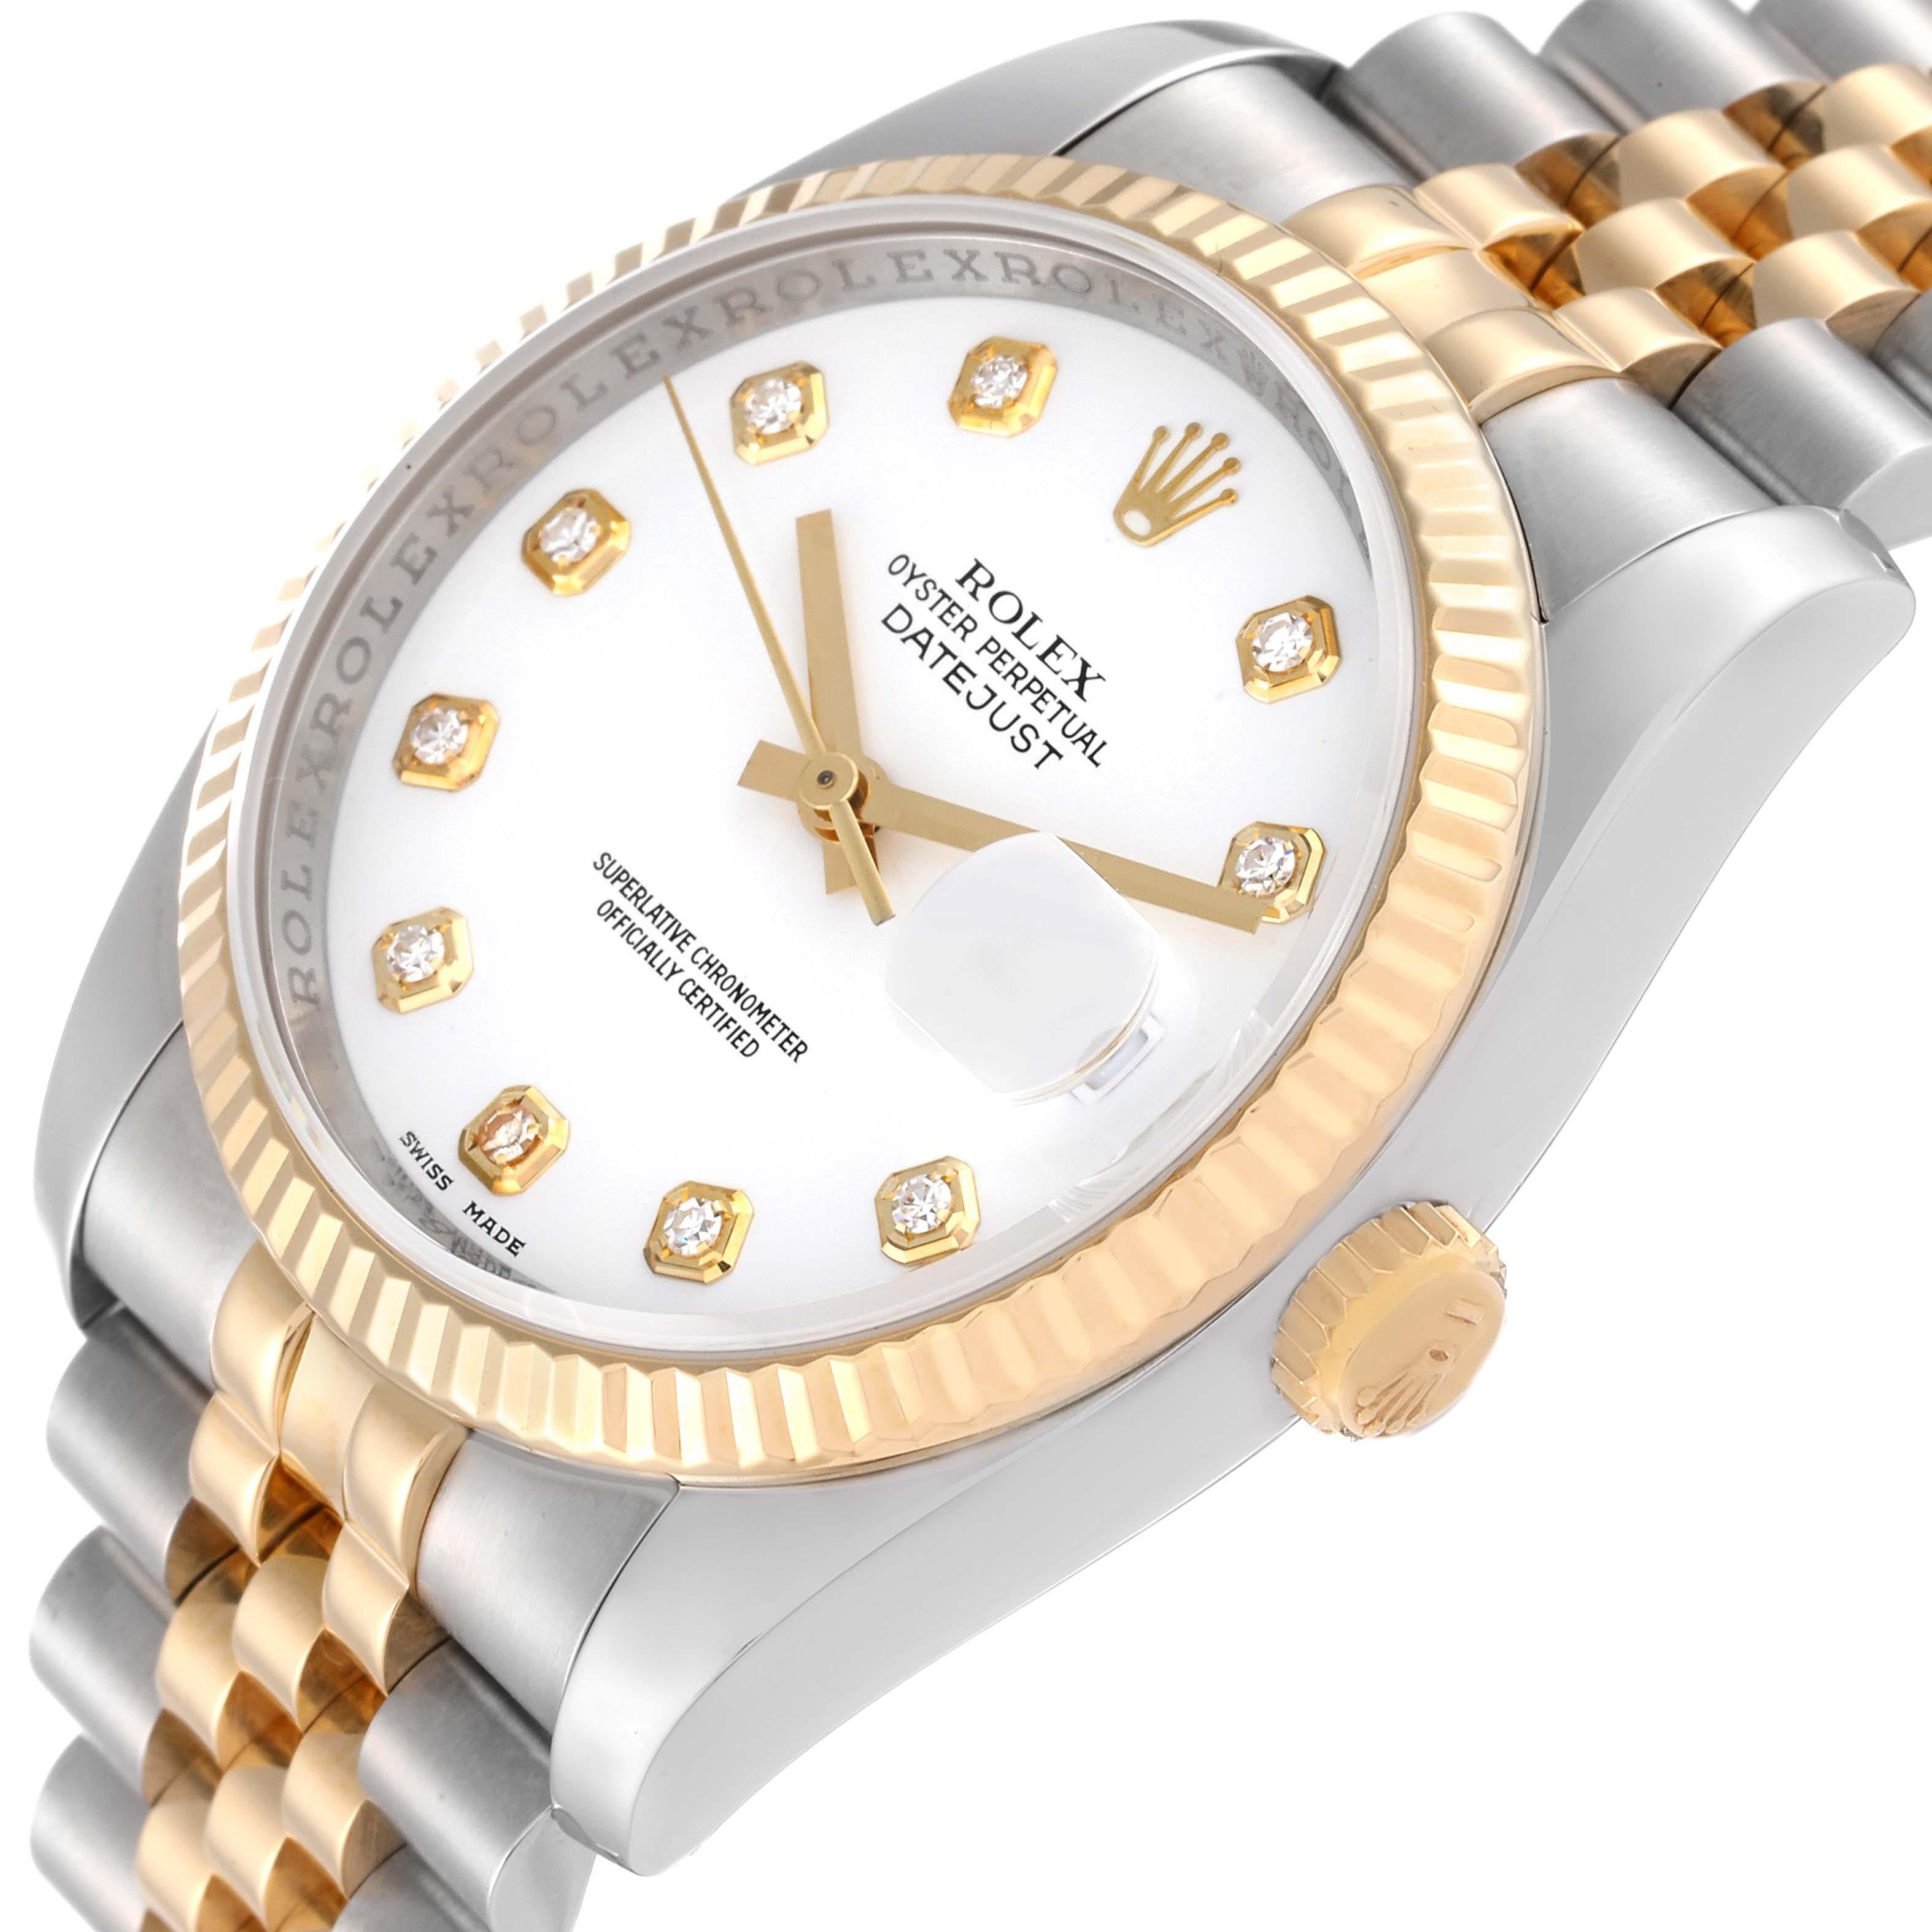 Rolex Datejust Steel Yellow Gold White Diamond Dial Mens Watch 116233 1